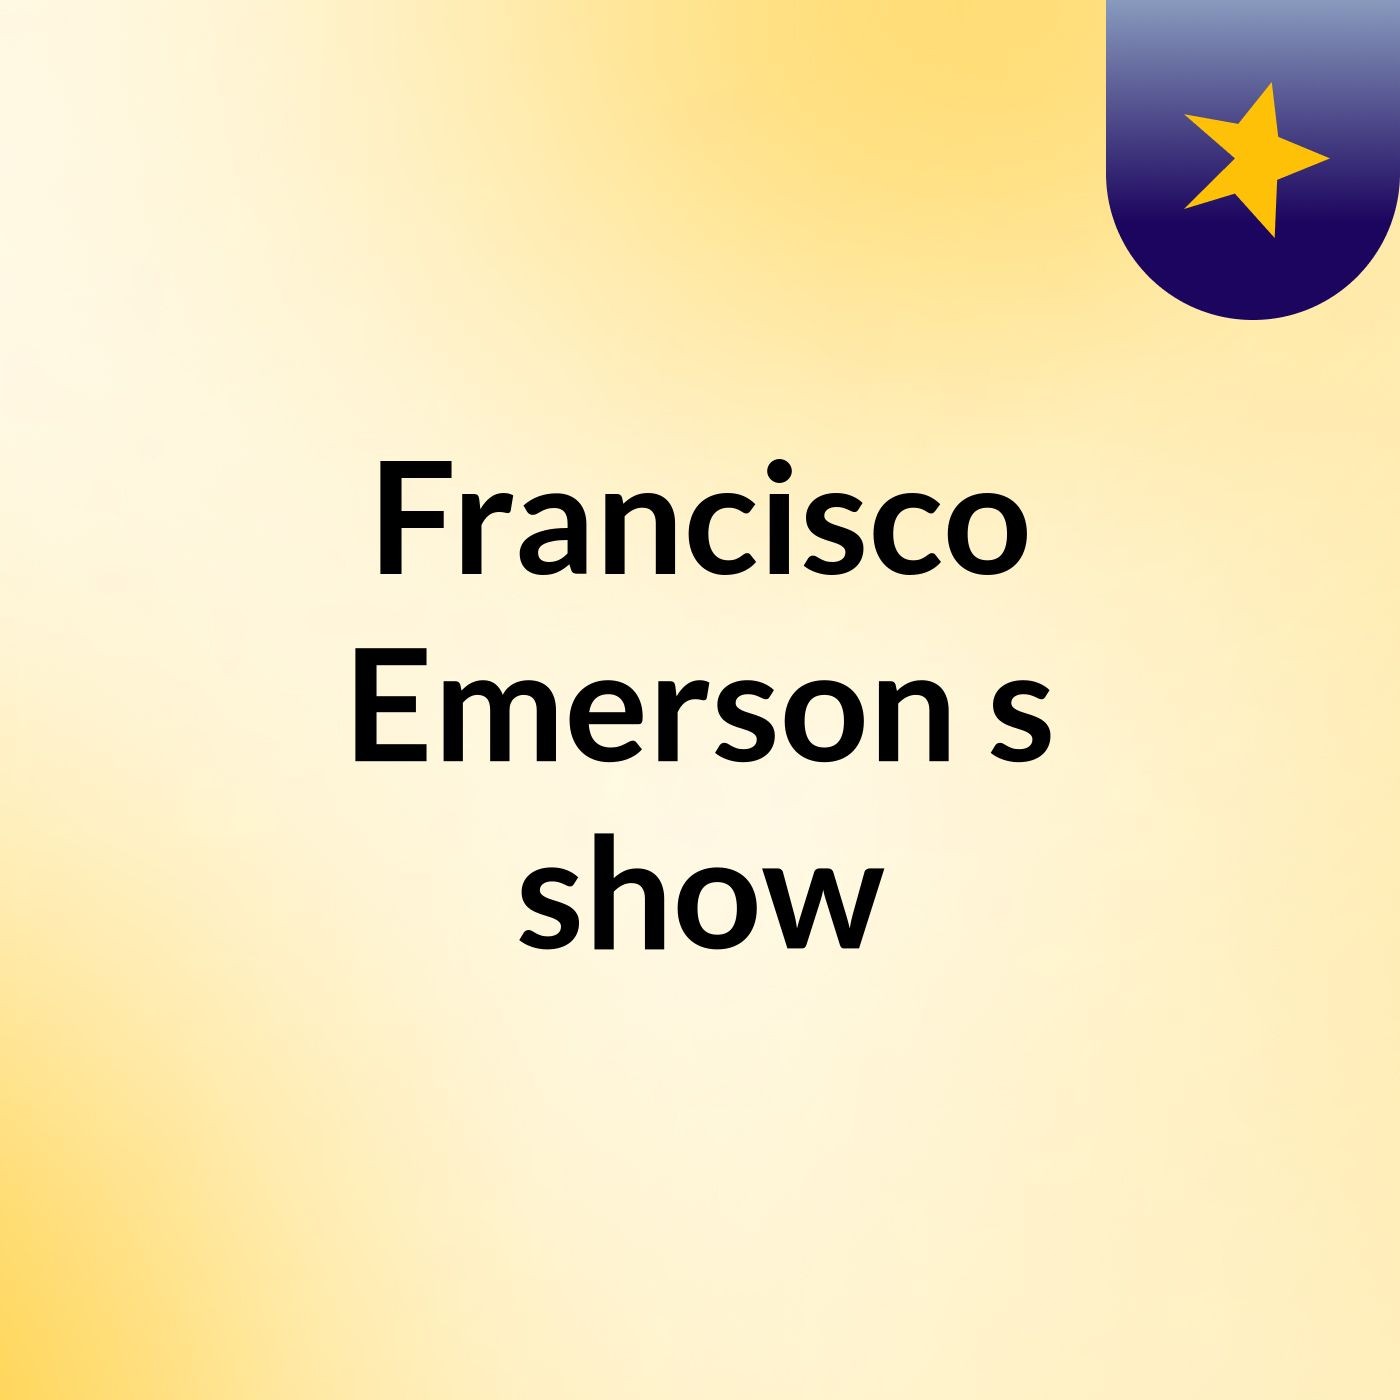 Francisco Emerson's show